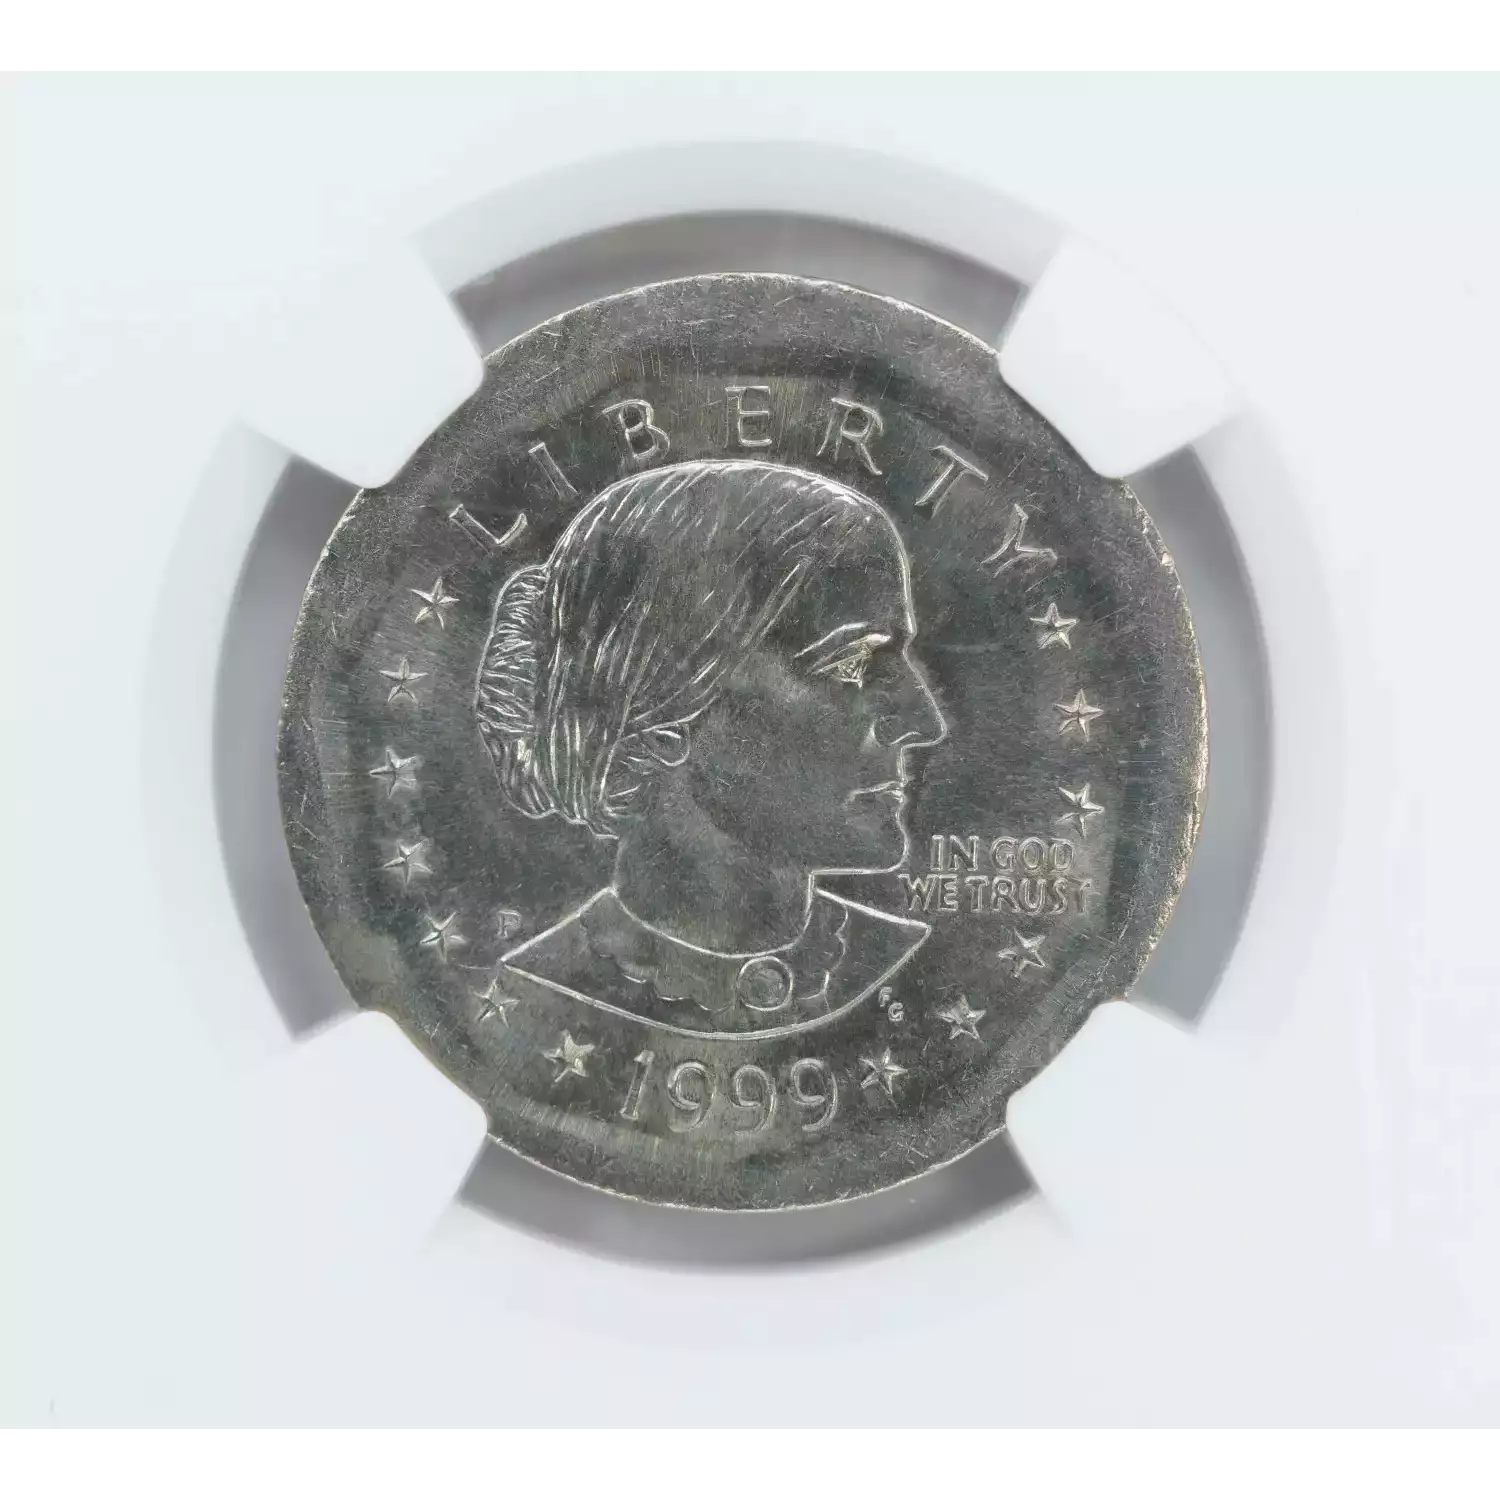 Dollars---Susan B. Anthony 1979-1999 -Copper-Nickel- 1 Dollar